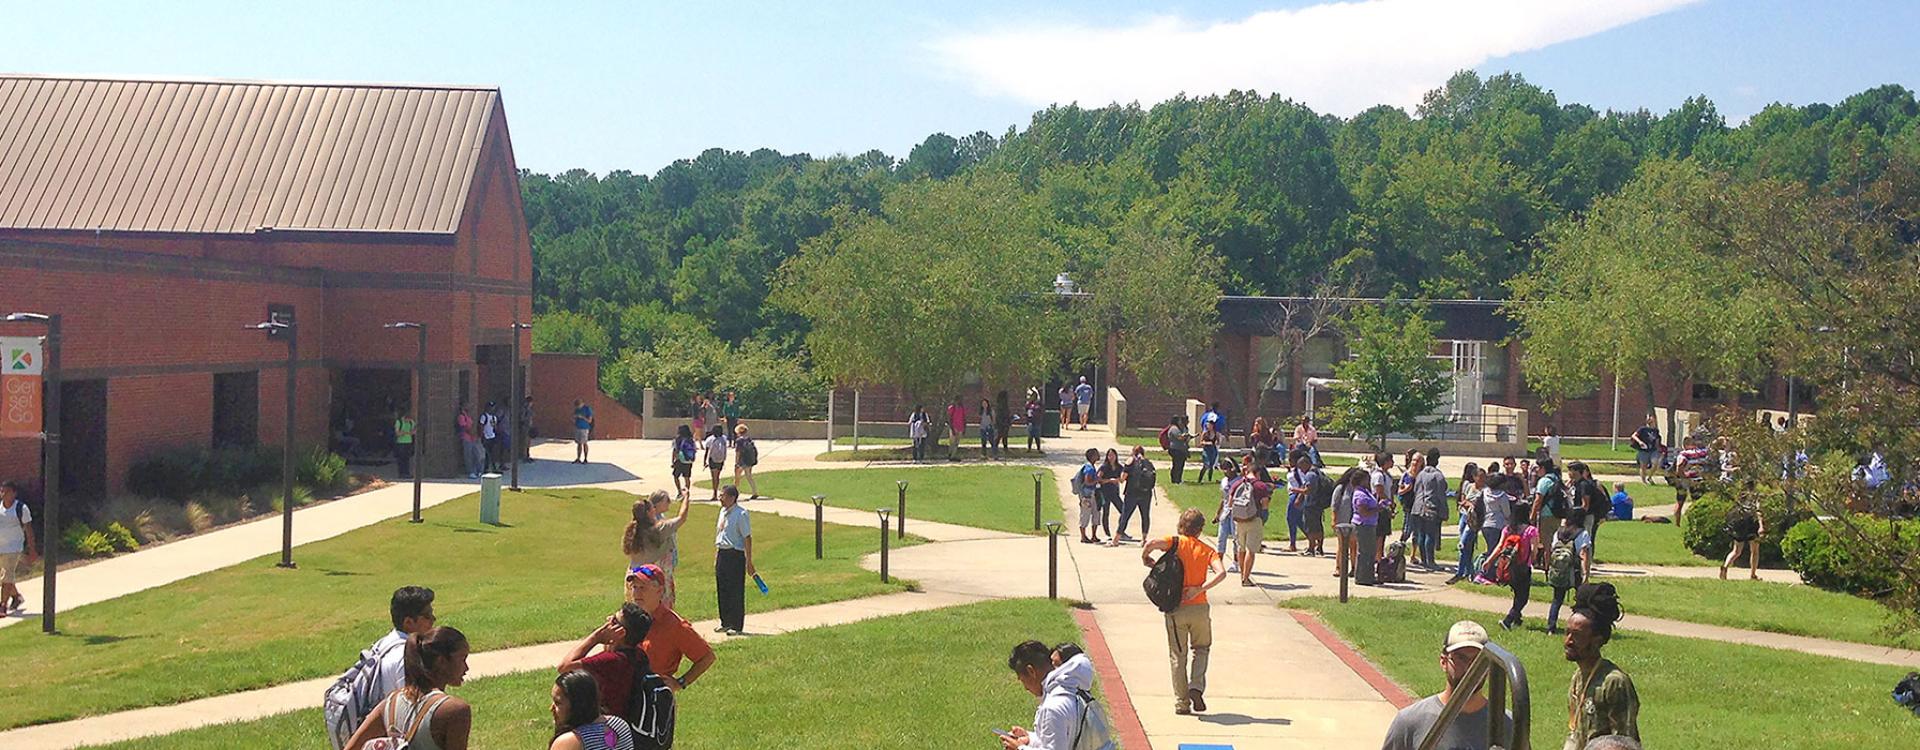 students walking in campus quad